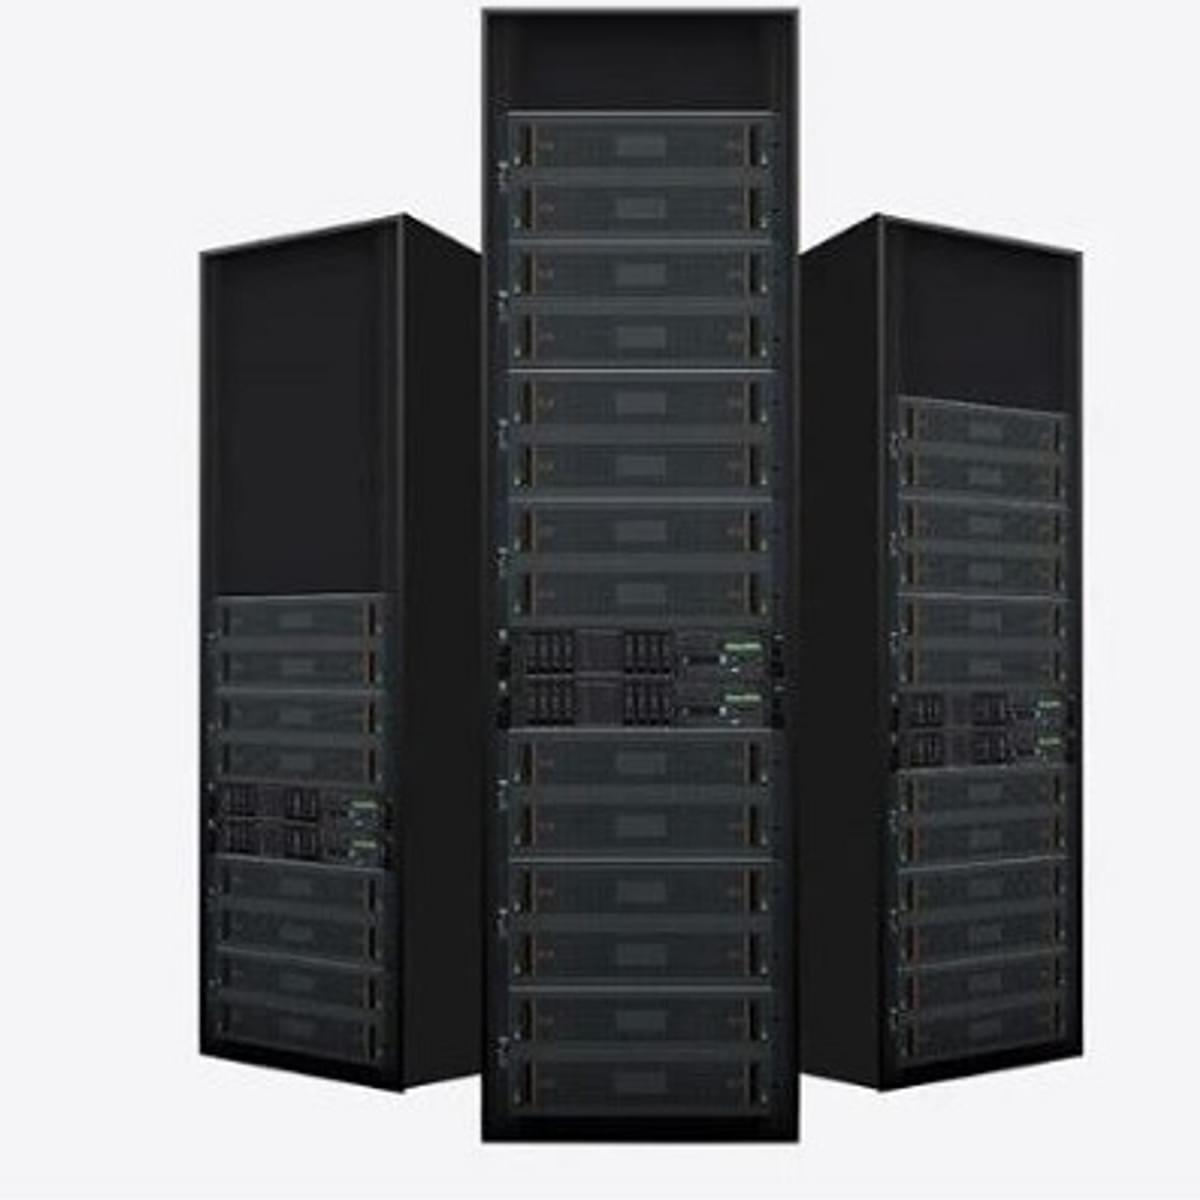 IBM lanceert nieuwe versie Elastic Storage System 5000 image